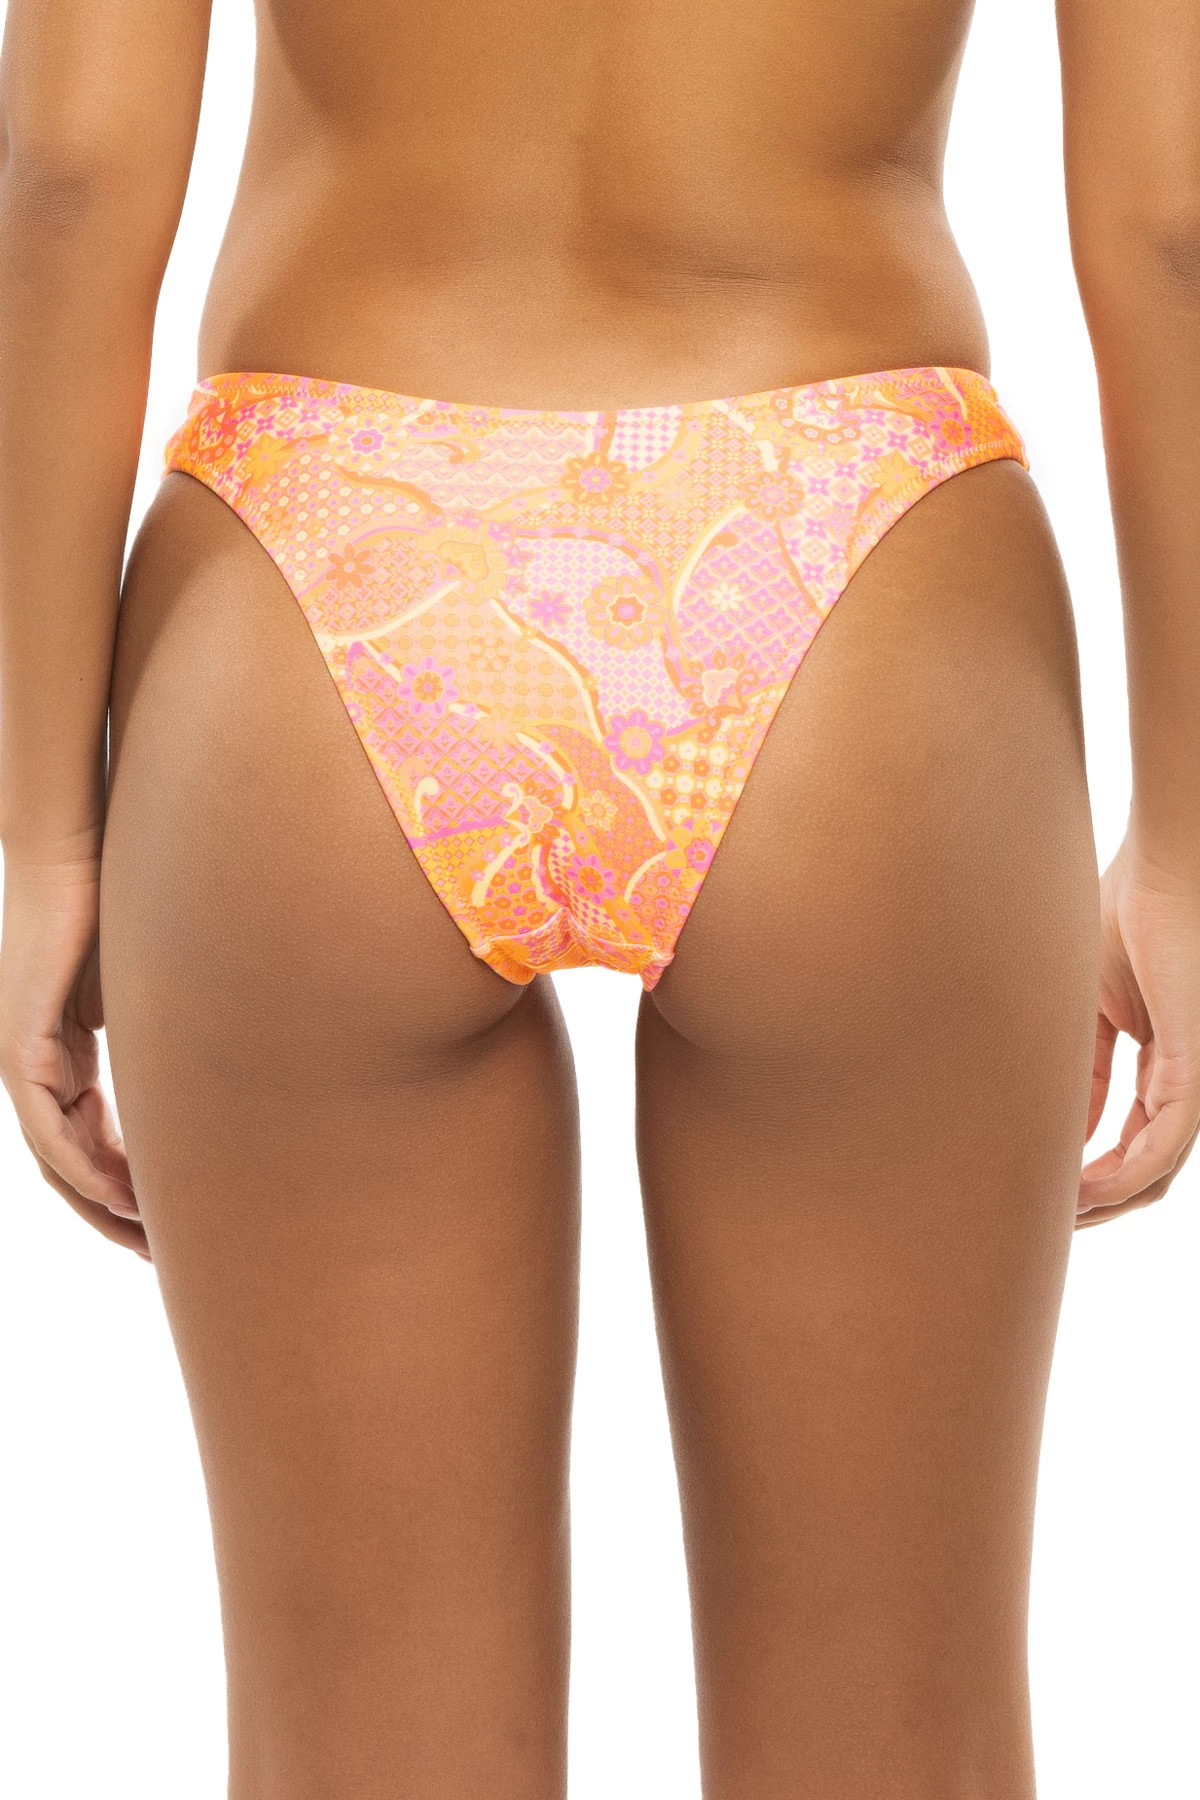 CITRUS SUNRISE Basic Brazilian Bikini Bottom image number 2